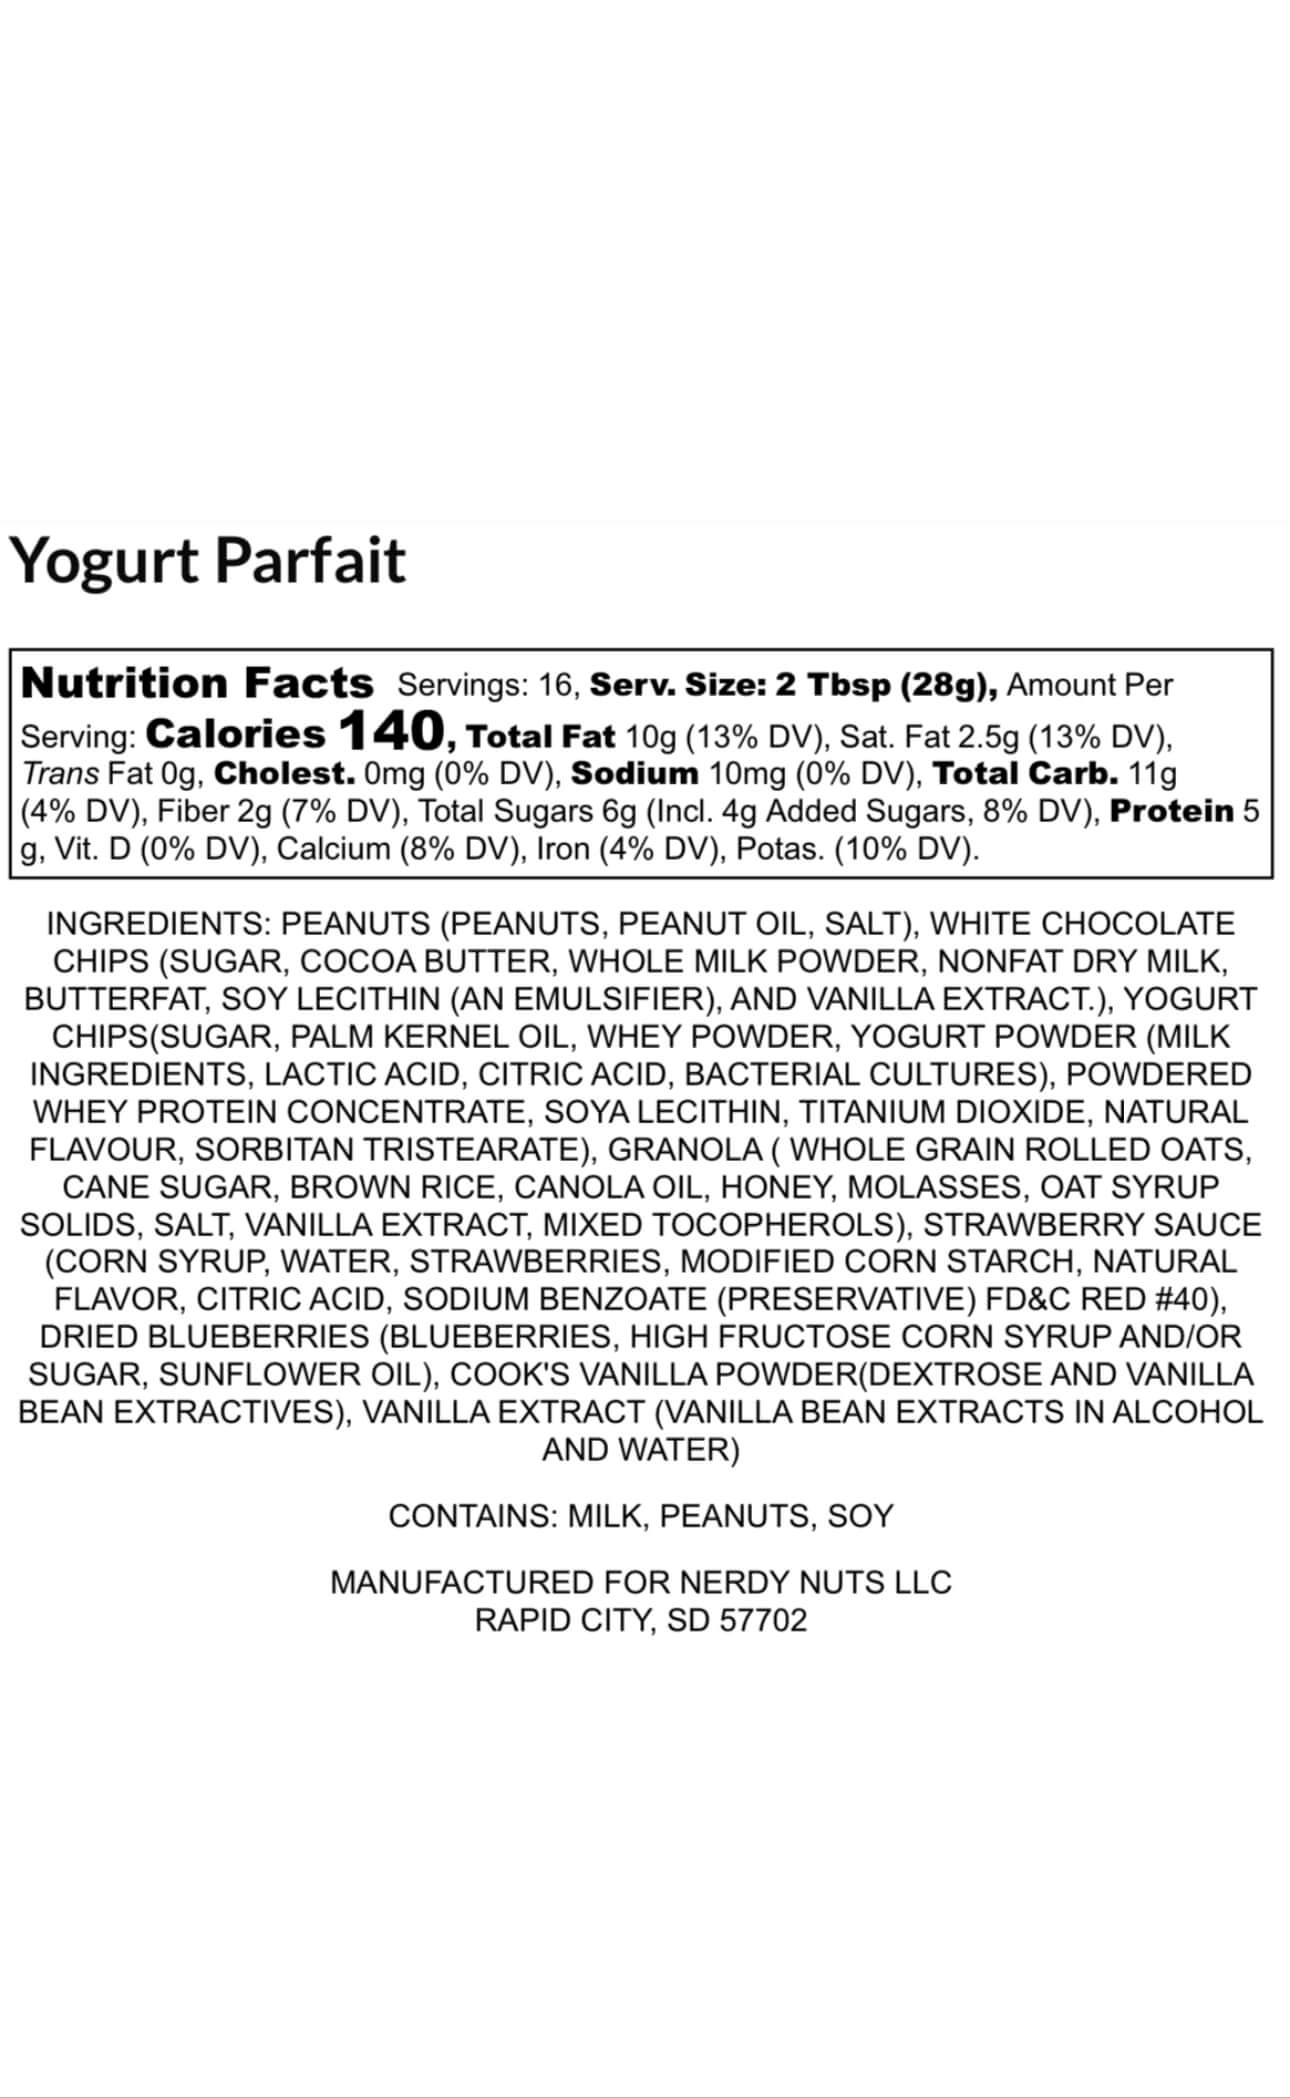 Yogurt Parfait Peanut Butter Treat | Nerdy Nuts